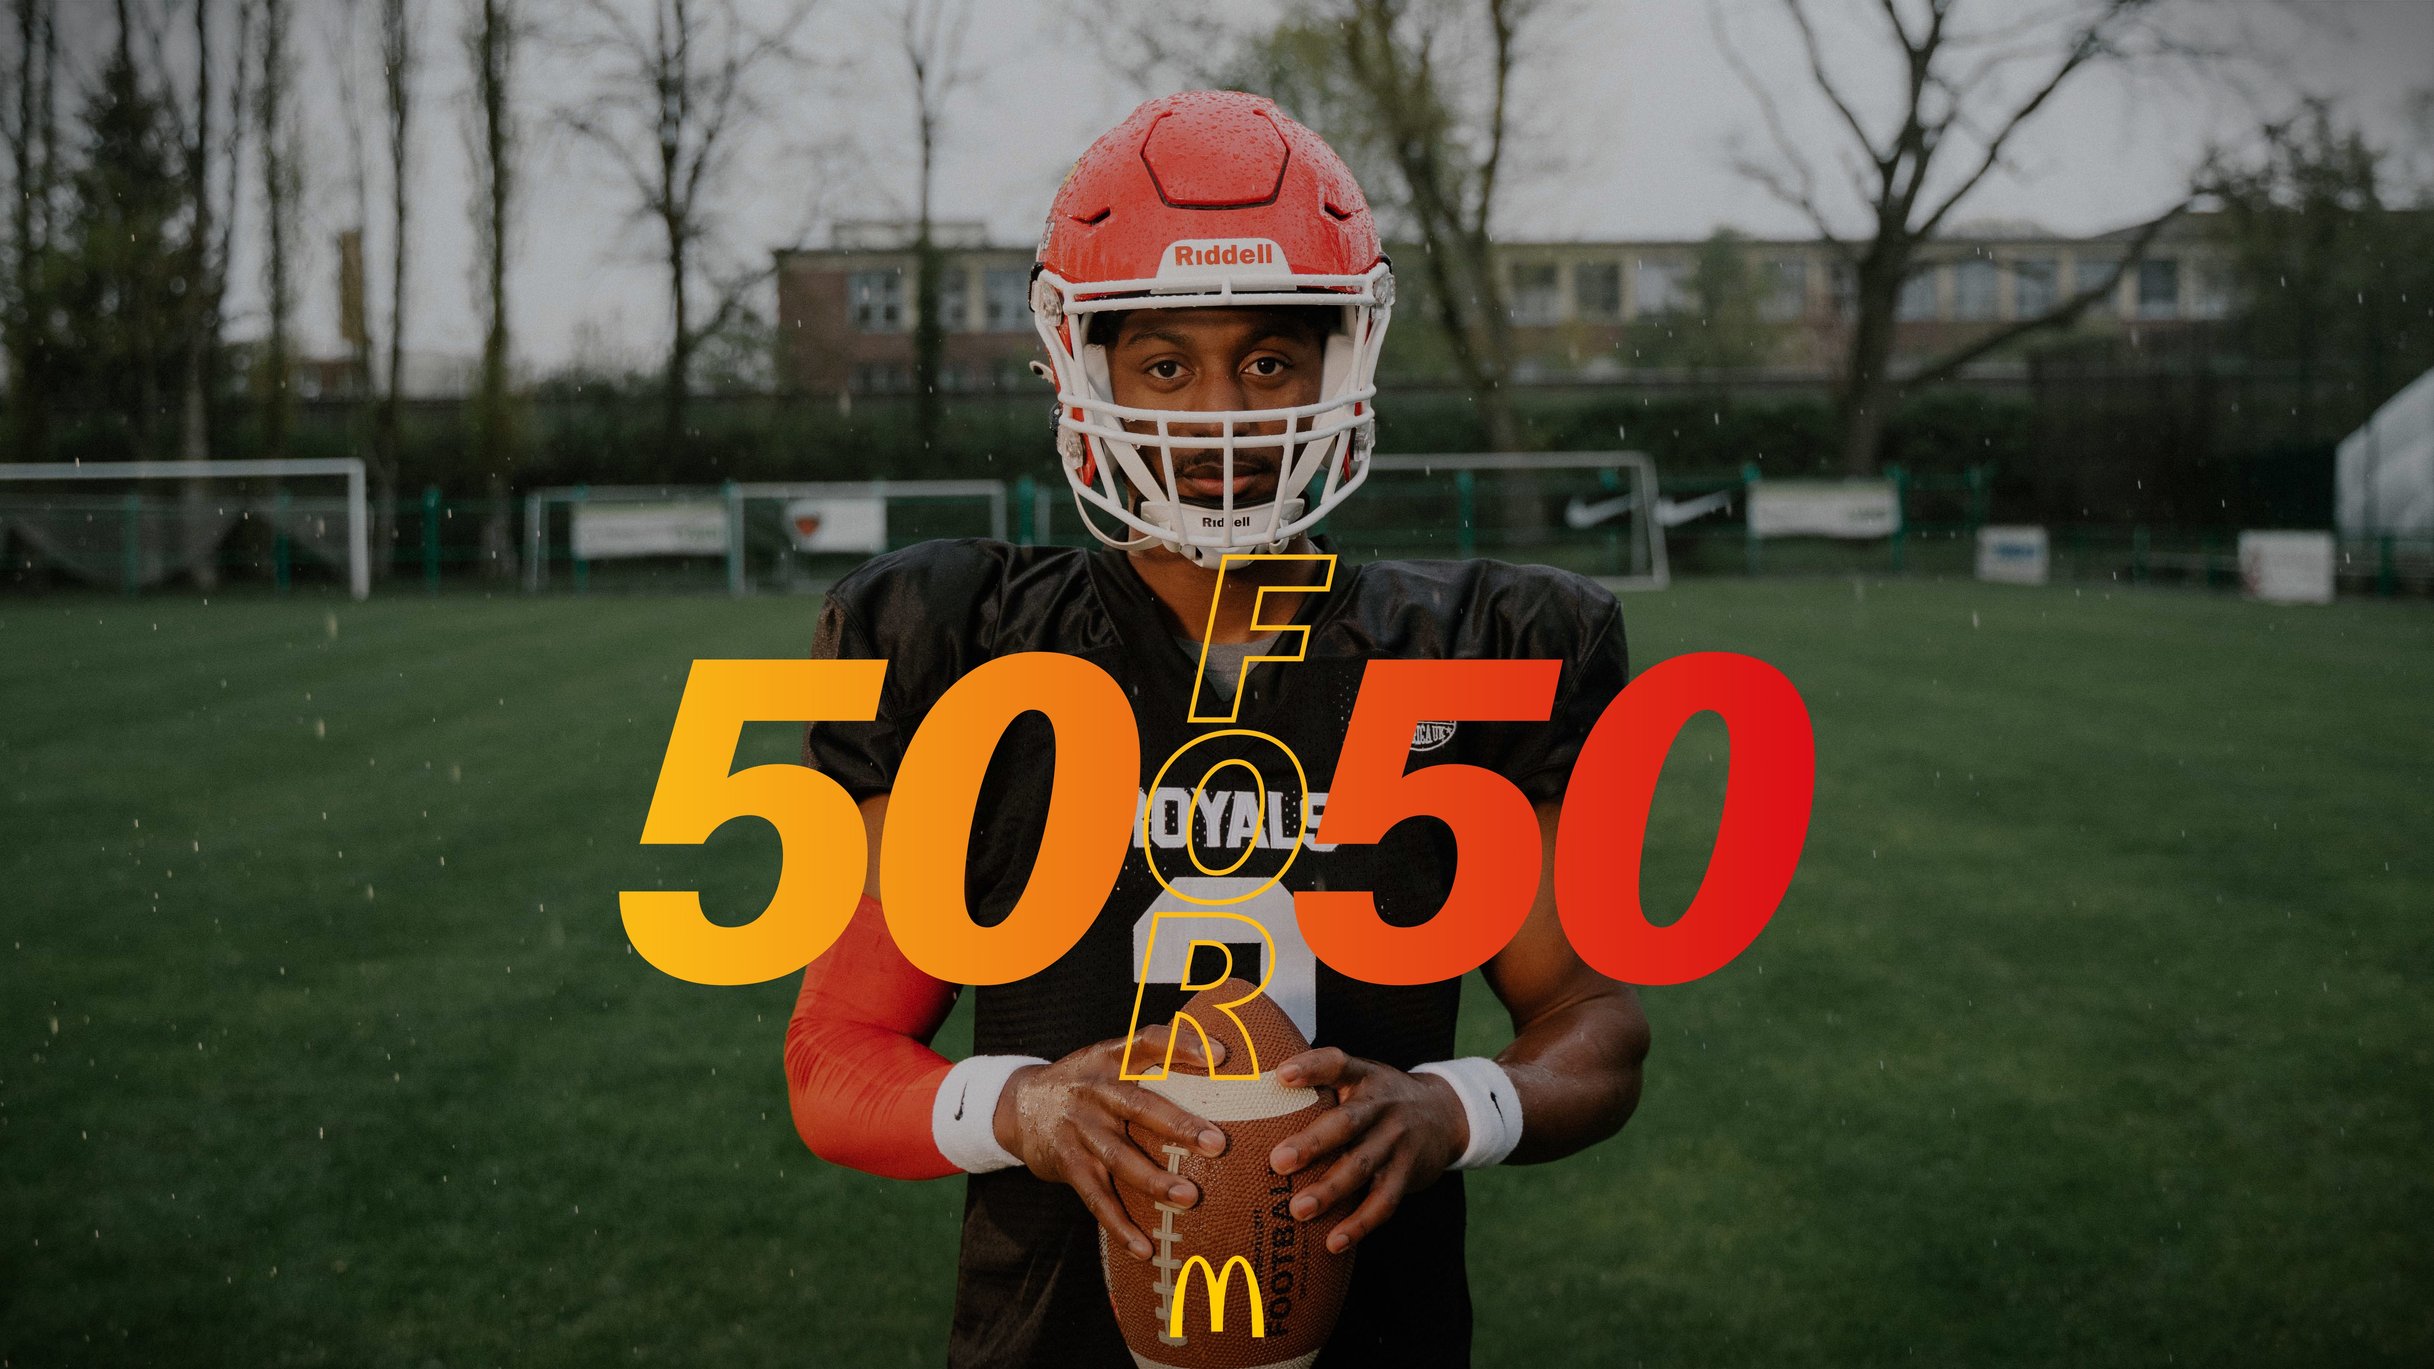 McDonalds Germany - #50for50